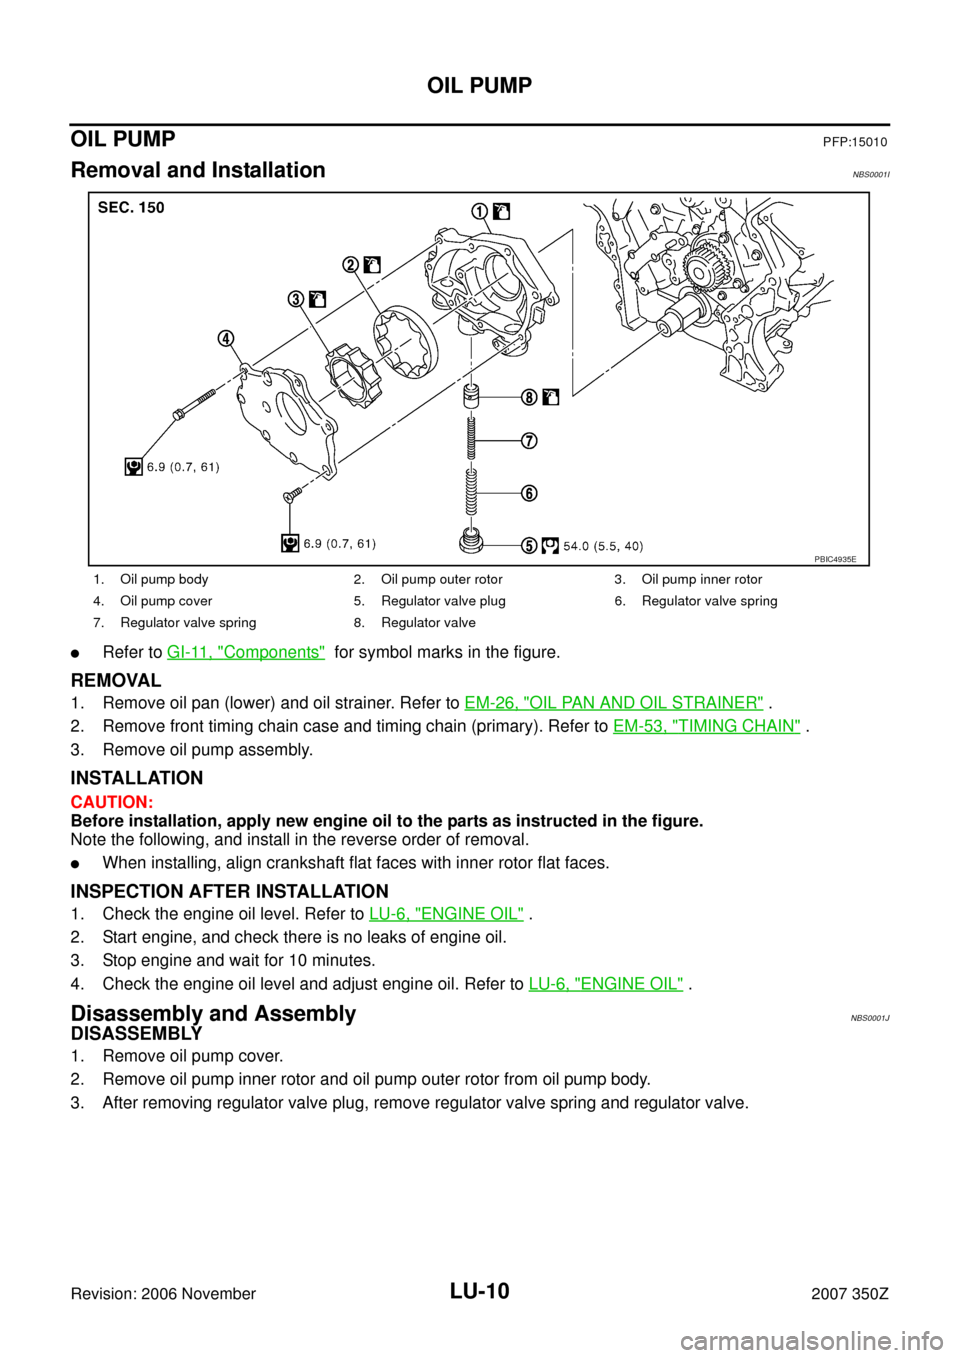 NISSAN 350Z 2007 Z33 Engine Lubrication System Workshop Manual LU-10
OIL PUMP
Revision: 2006 November2007 350Z
OIL PUMPPFP:15010
Removal and InstallationNBS0001I
Refer to GI-11, "Components"  for symbol marks in the figure.
REMOVAL
1. Remove oil pan (lower) and 